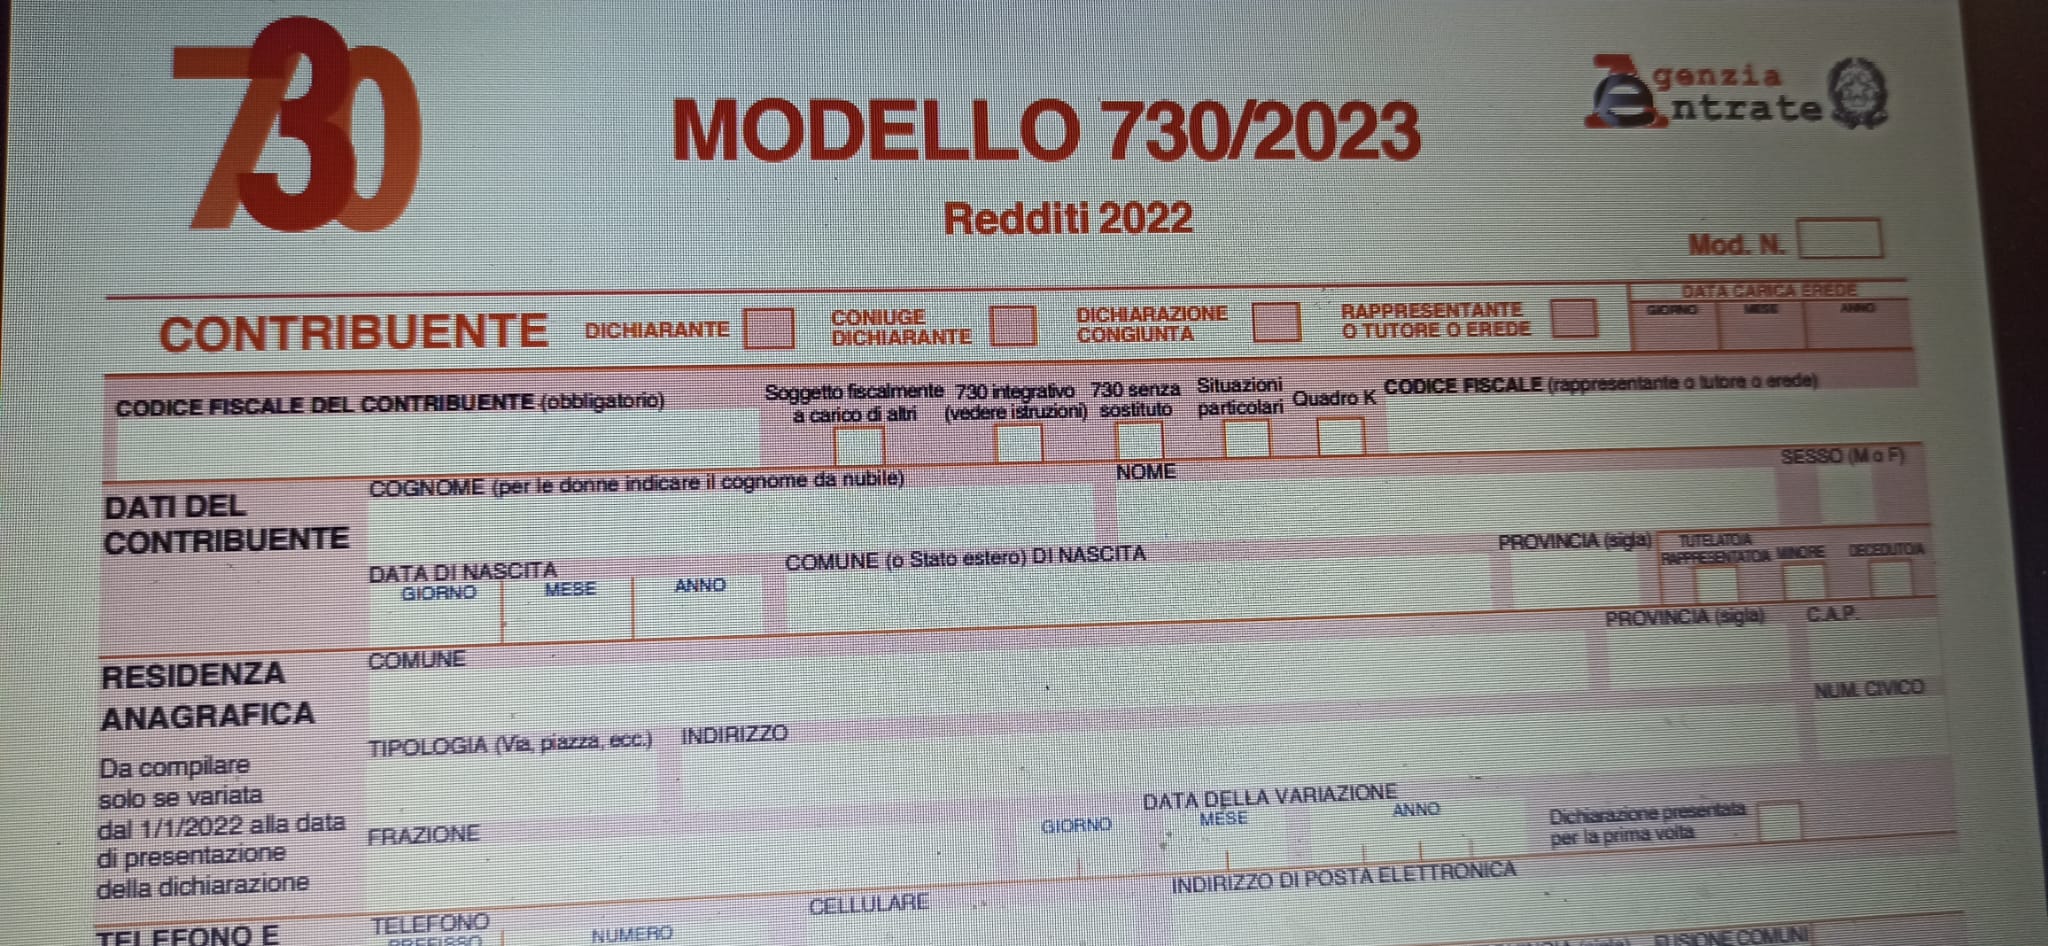 modello 730/2023